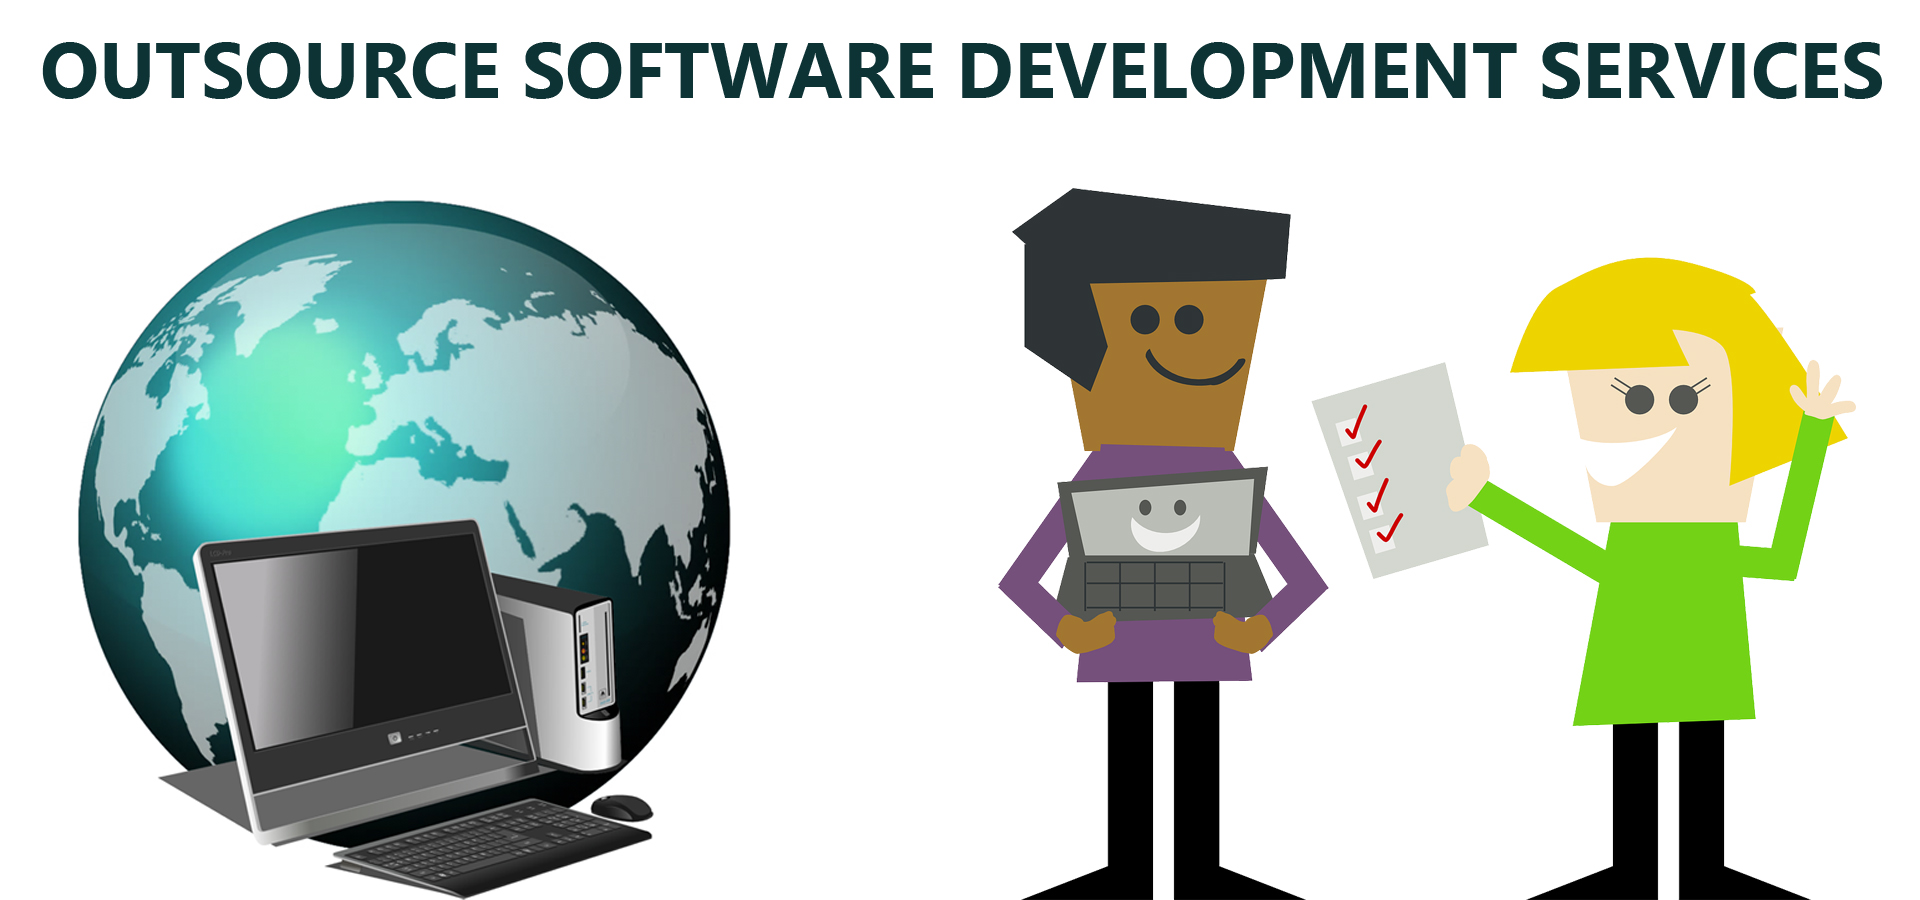 Outsource Mobile Application Development Services | Outsource Software Development